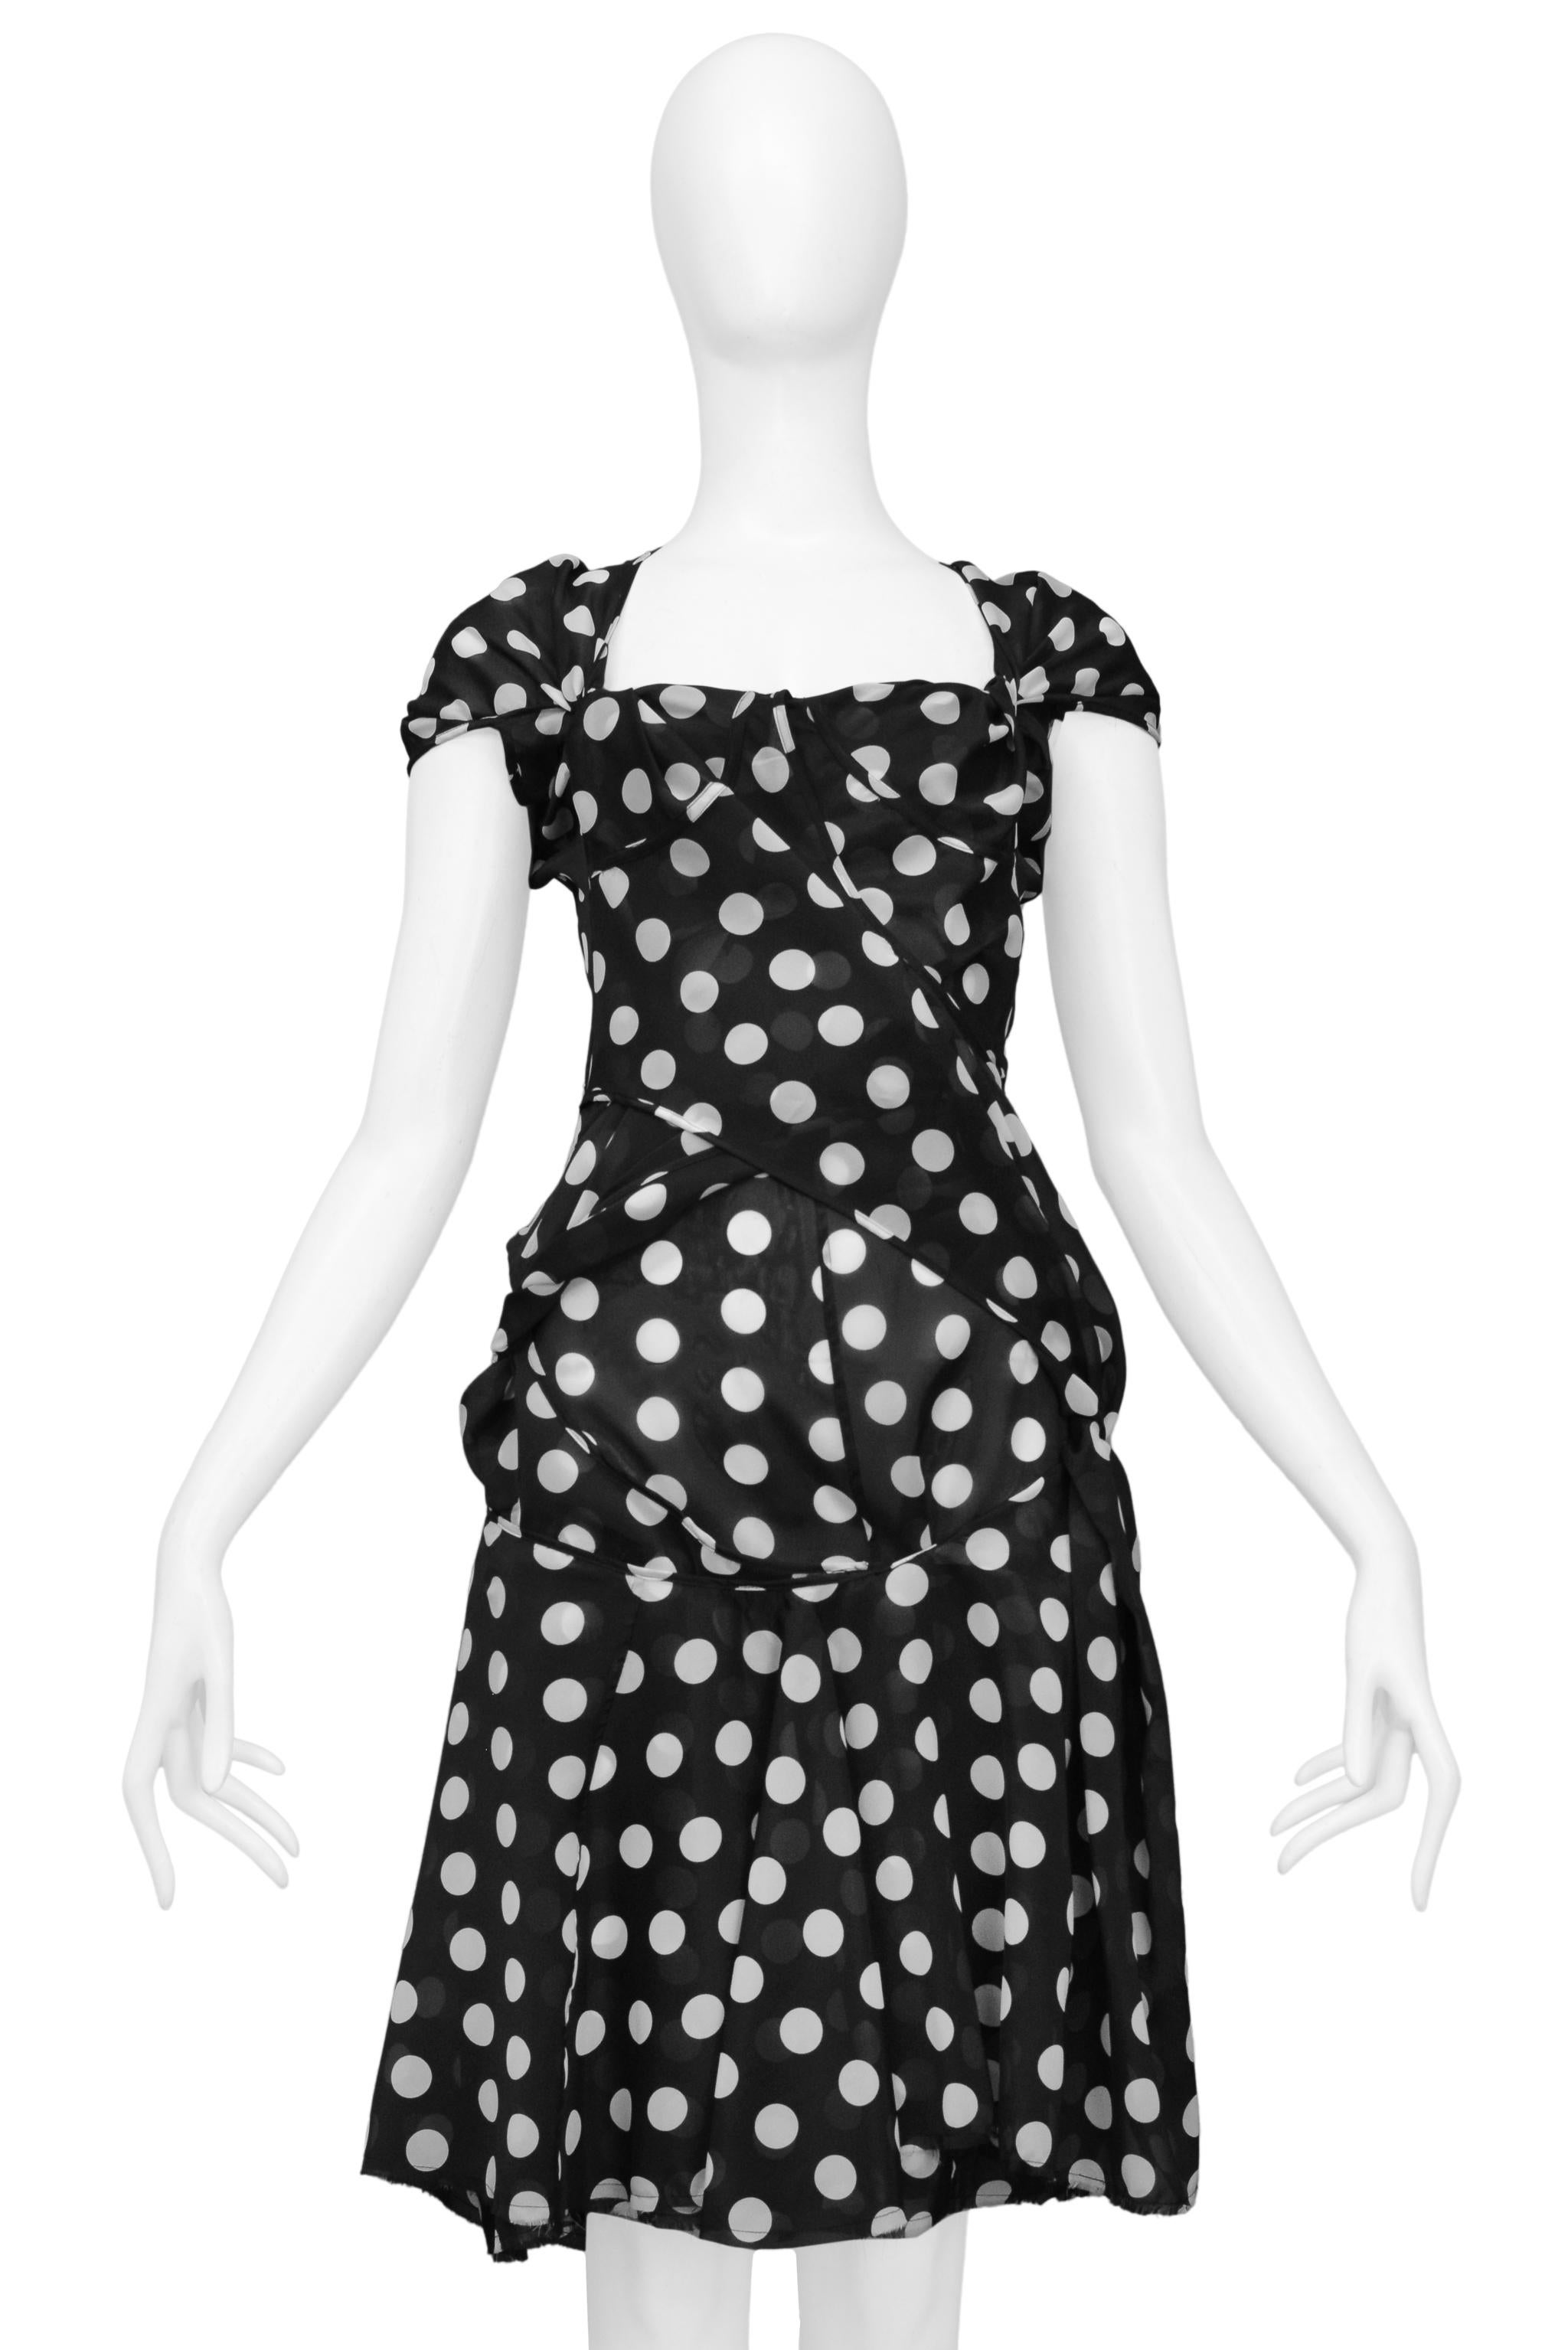 Women's Junya Watanabe Black & White Polka Dot Concept Dress 2004 For Sale